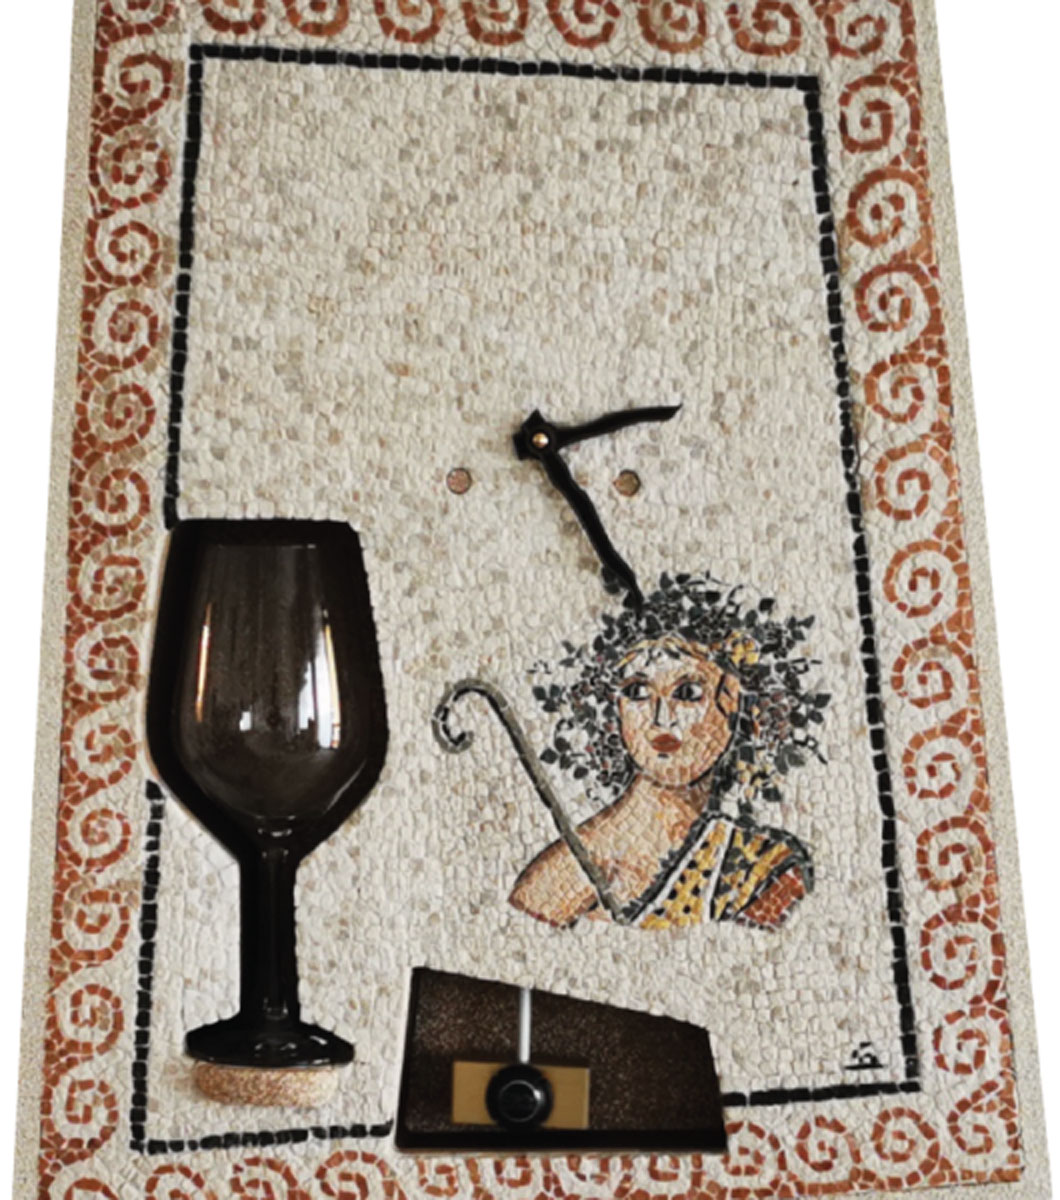 Mosaico Bacco / Bacchus mosaic